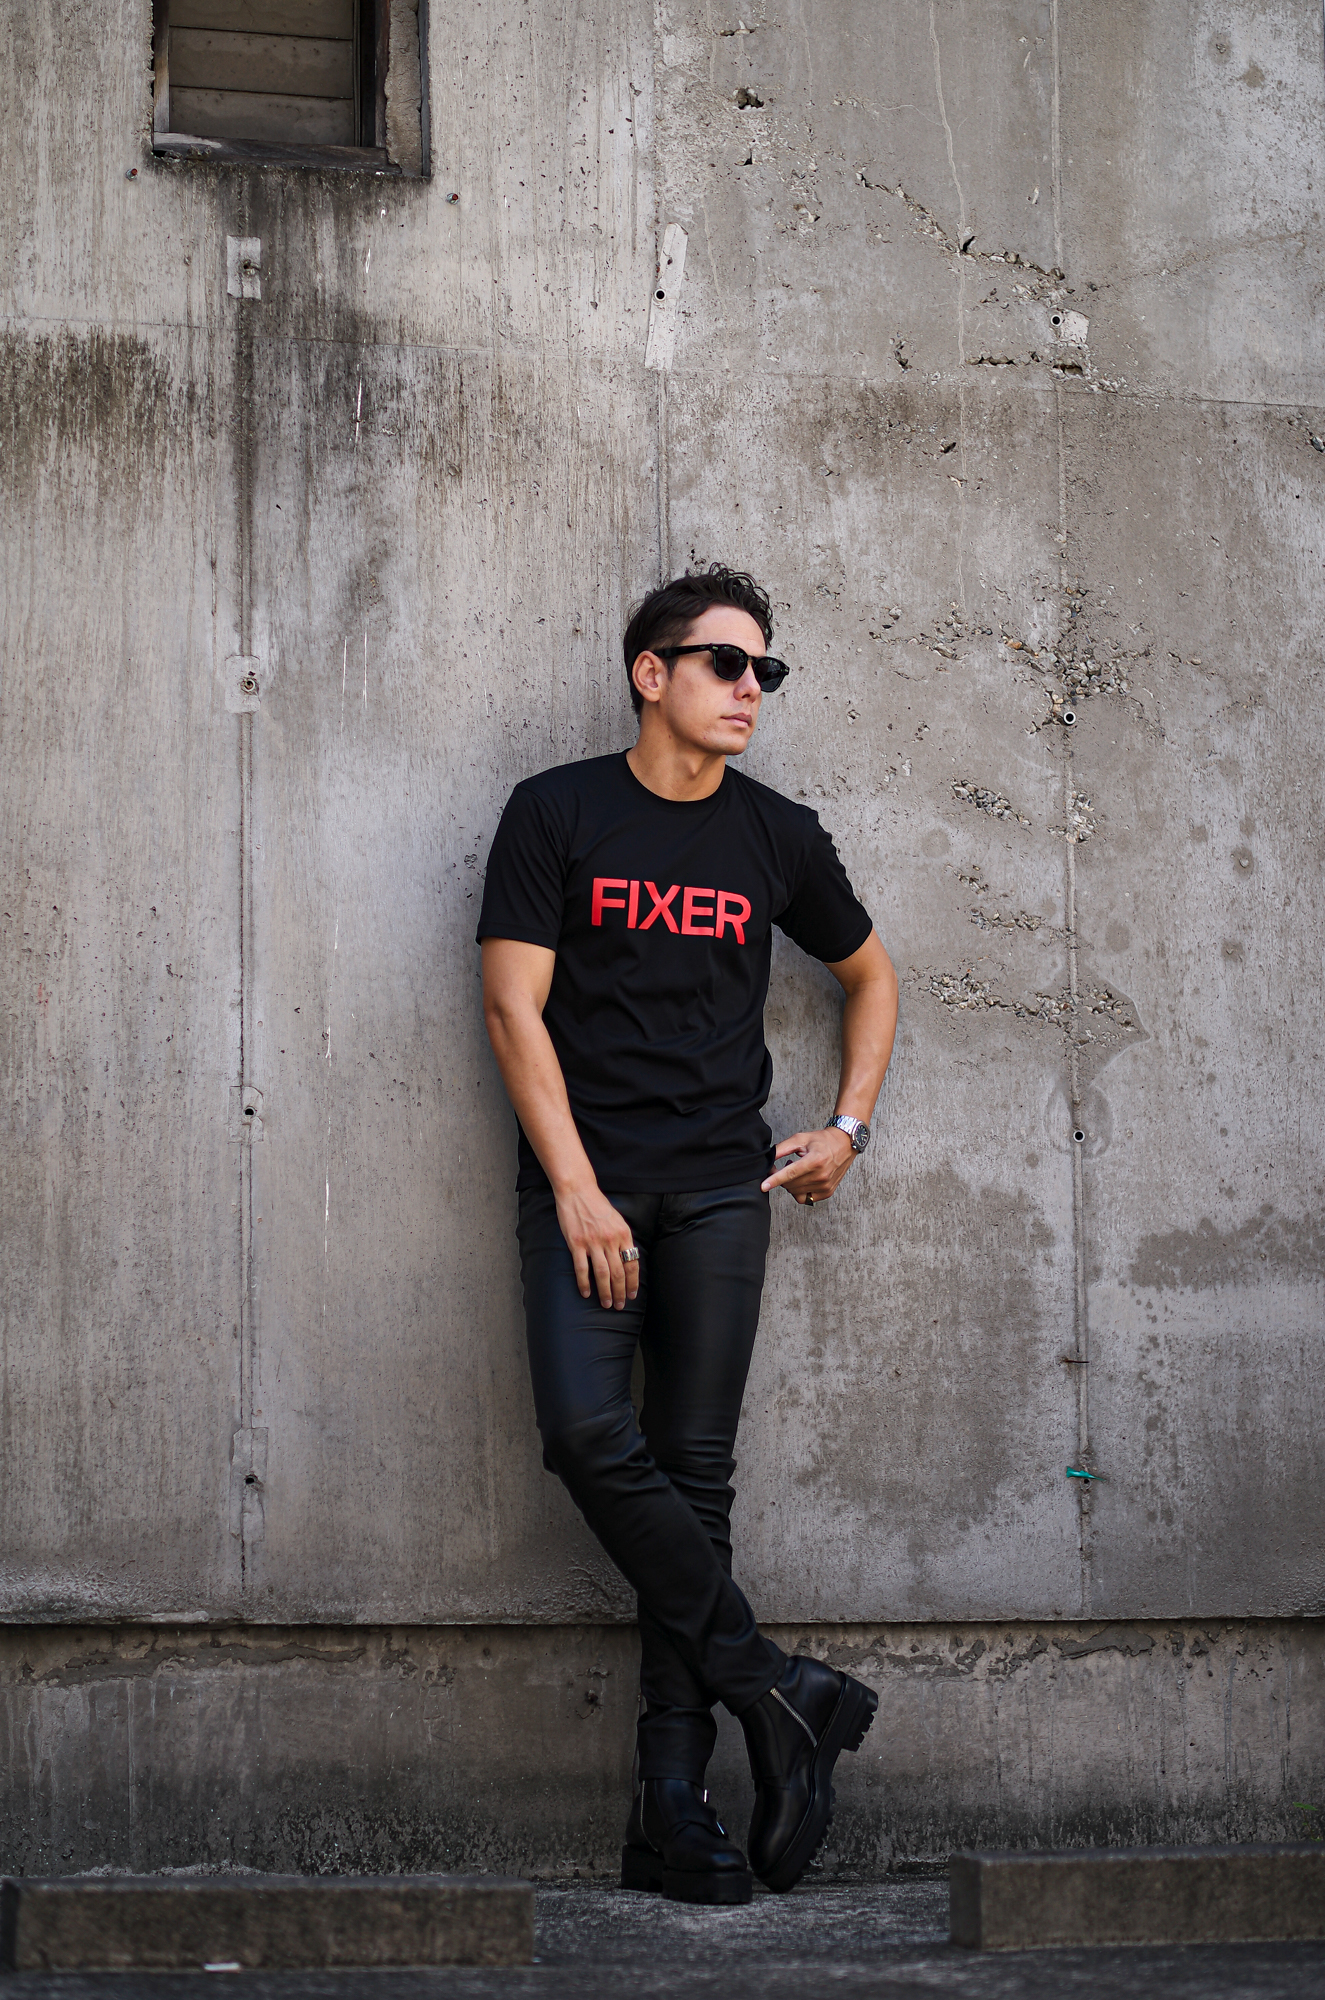 FIXER (フィクサー) FTS-02 FIXER Print Crew Neck T-shirt プリント Tシャツ BLACK × RED (ブラック×レッド)  【ご予約開始】【2024.6.03(Mon)～2024.6.16(Sun)】愛知 名古屋 Alto e Diritto altoediritto アルトエデリット